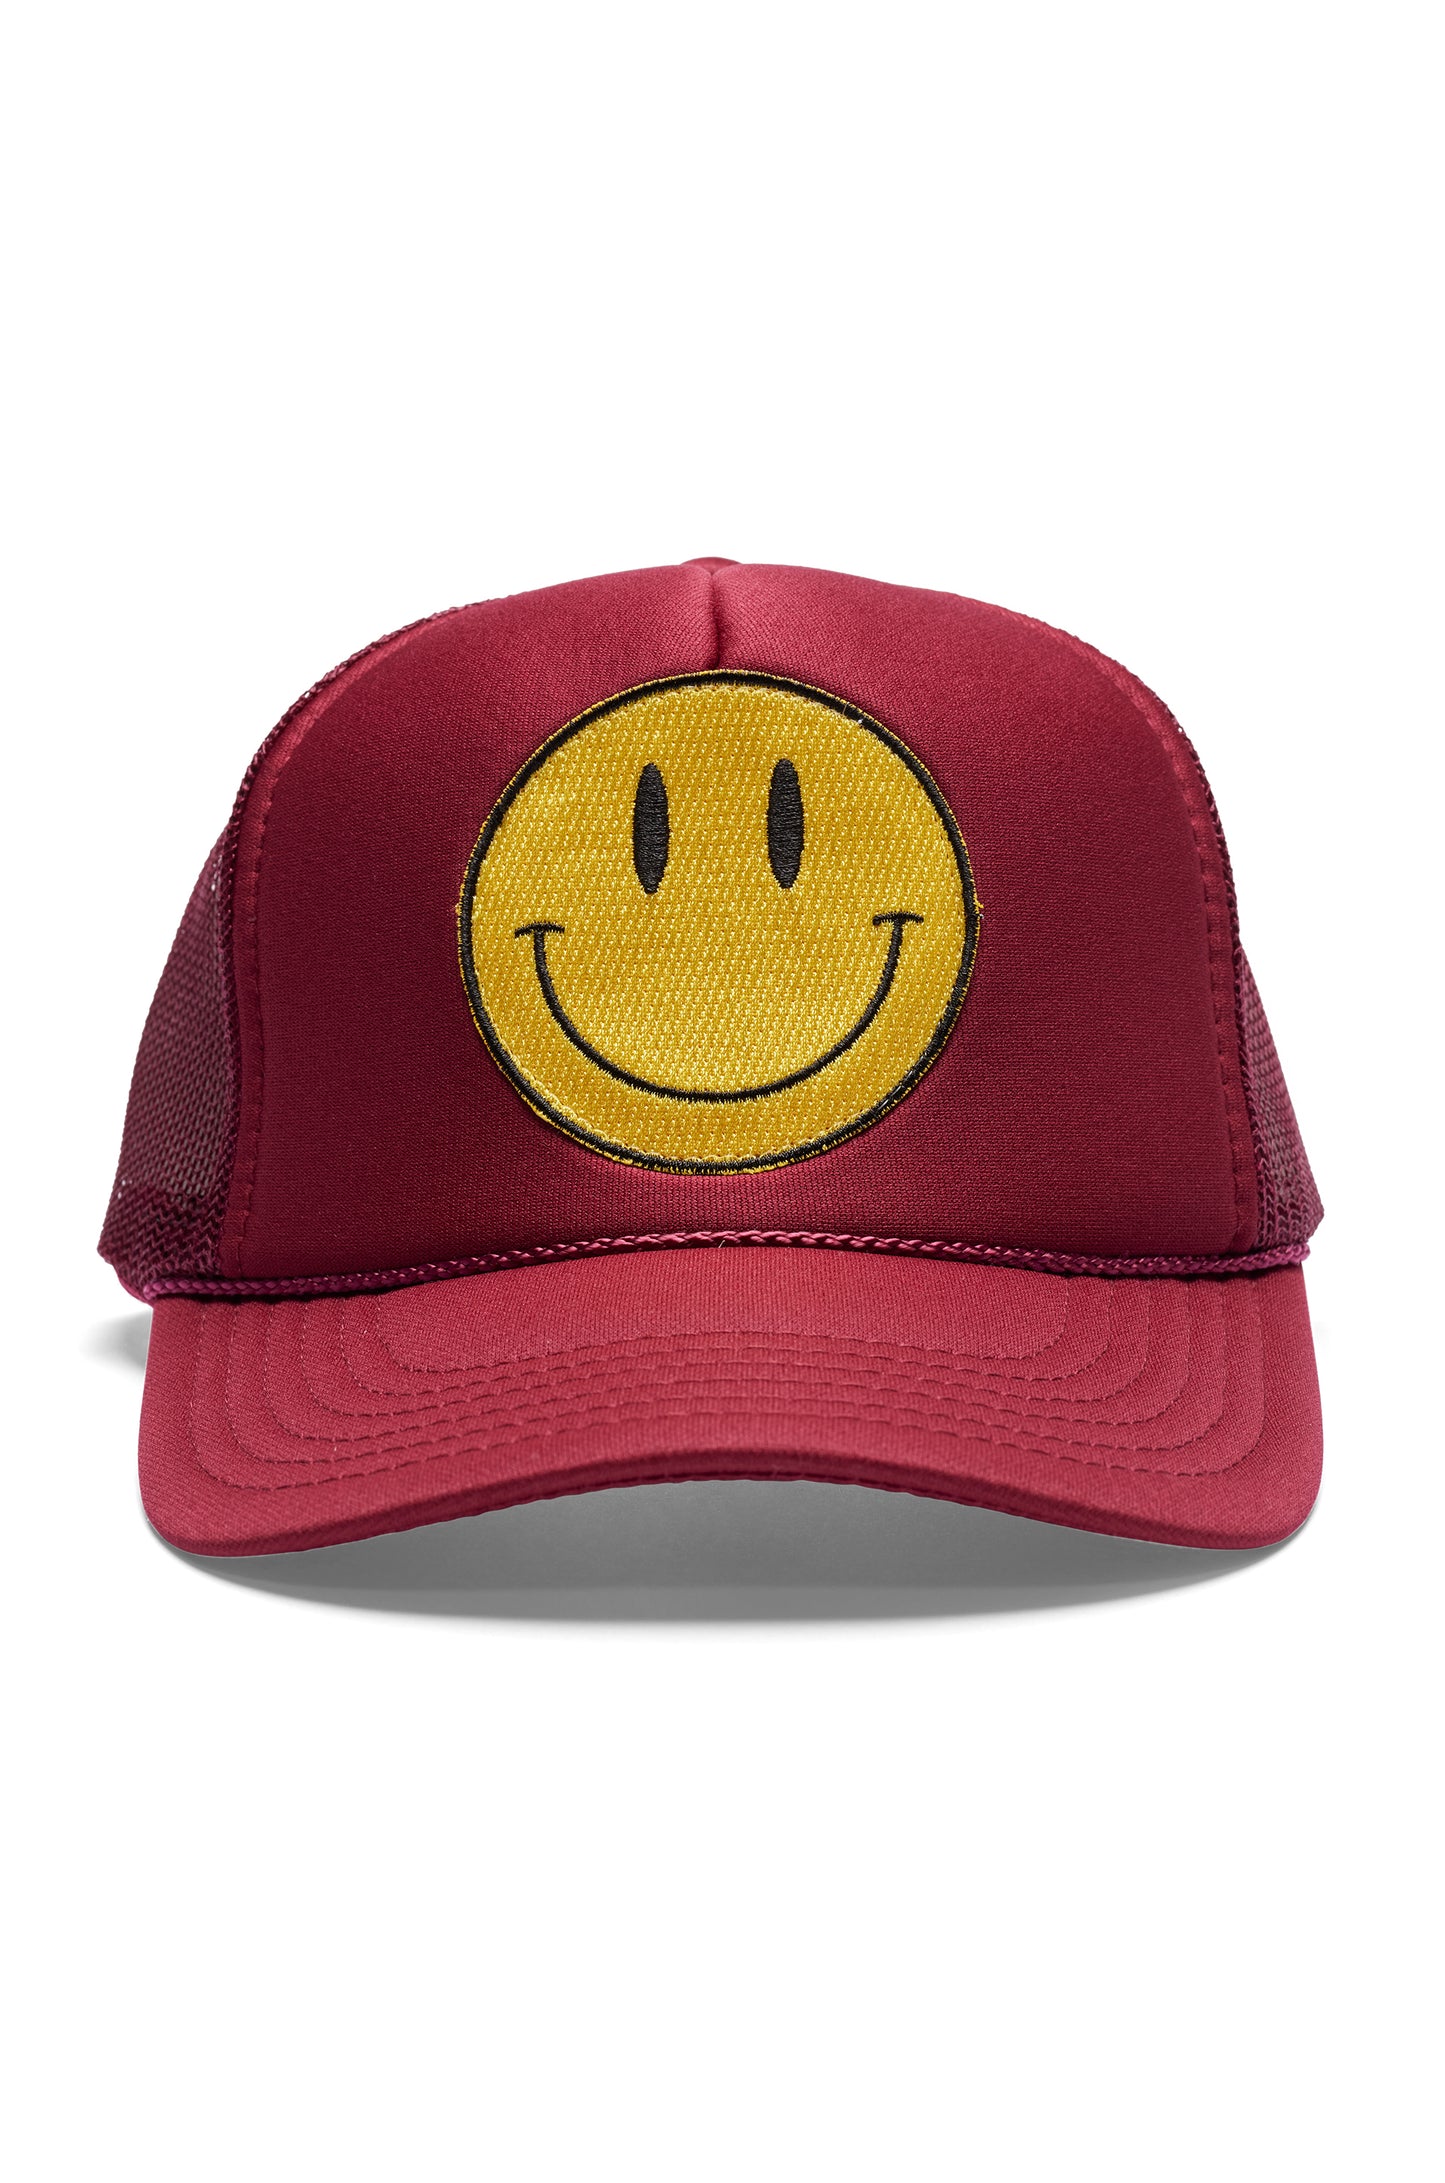 Happy Hat - Maroon